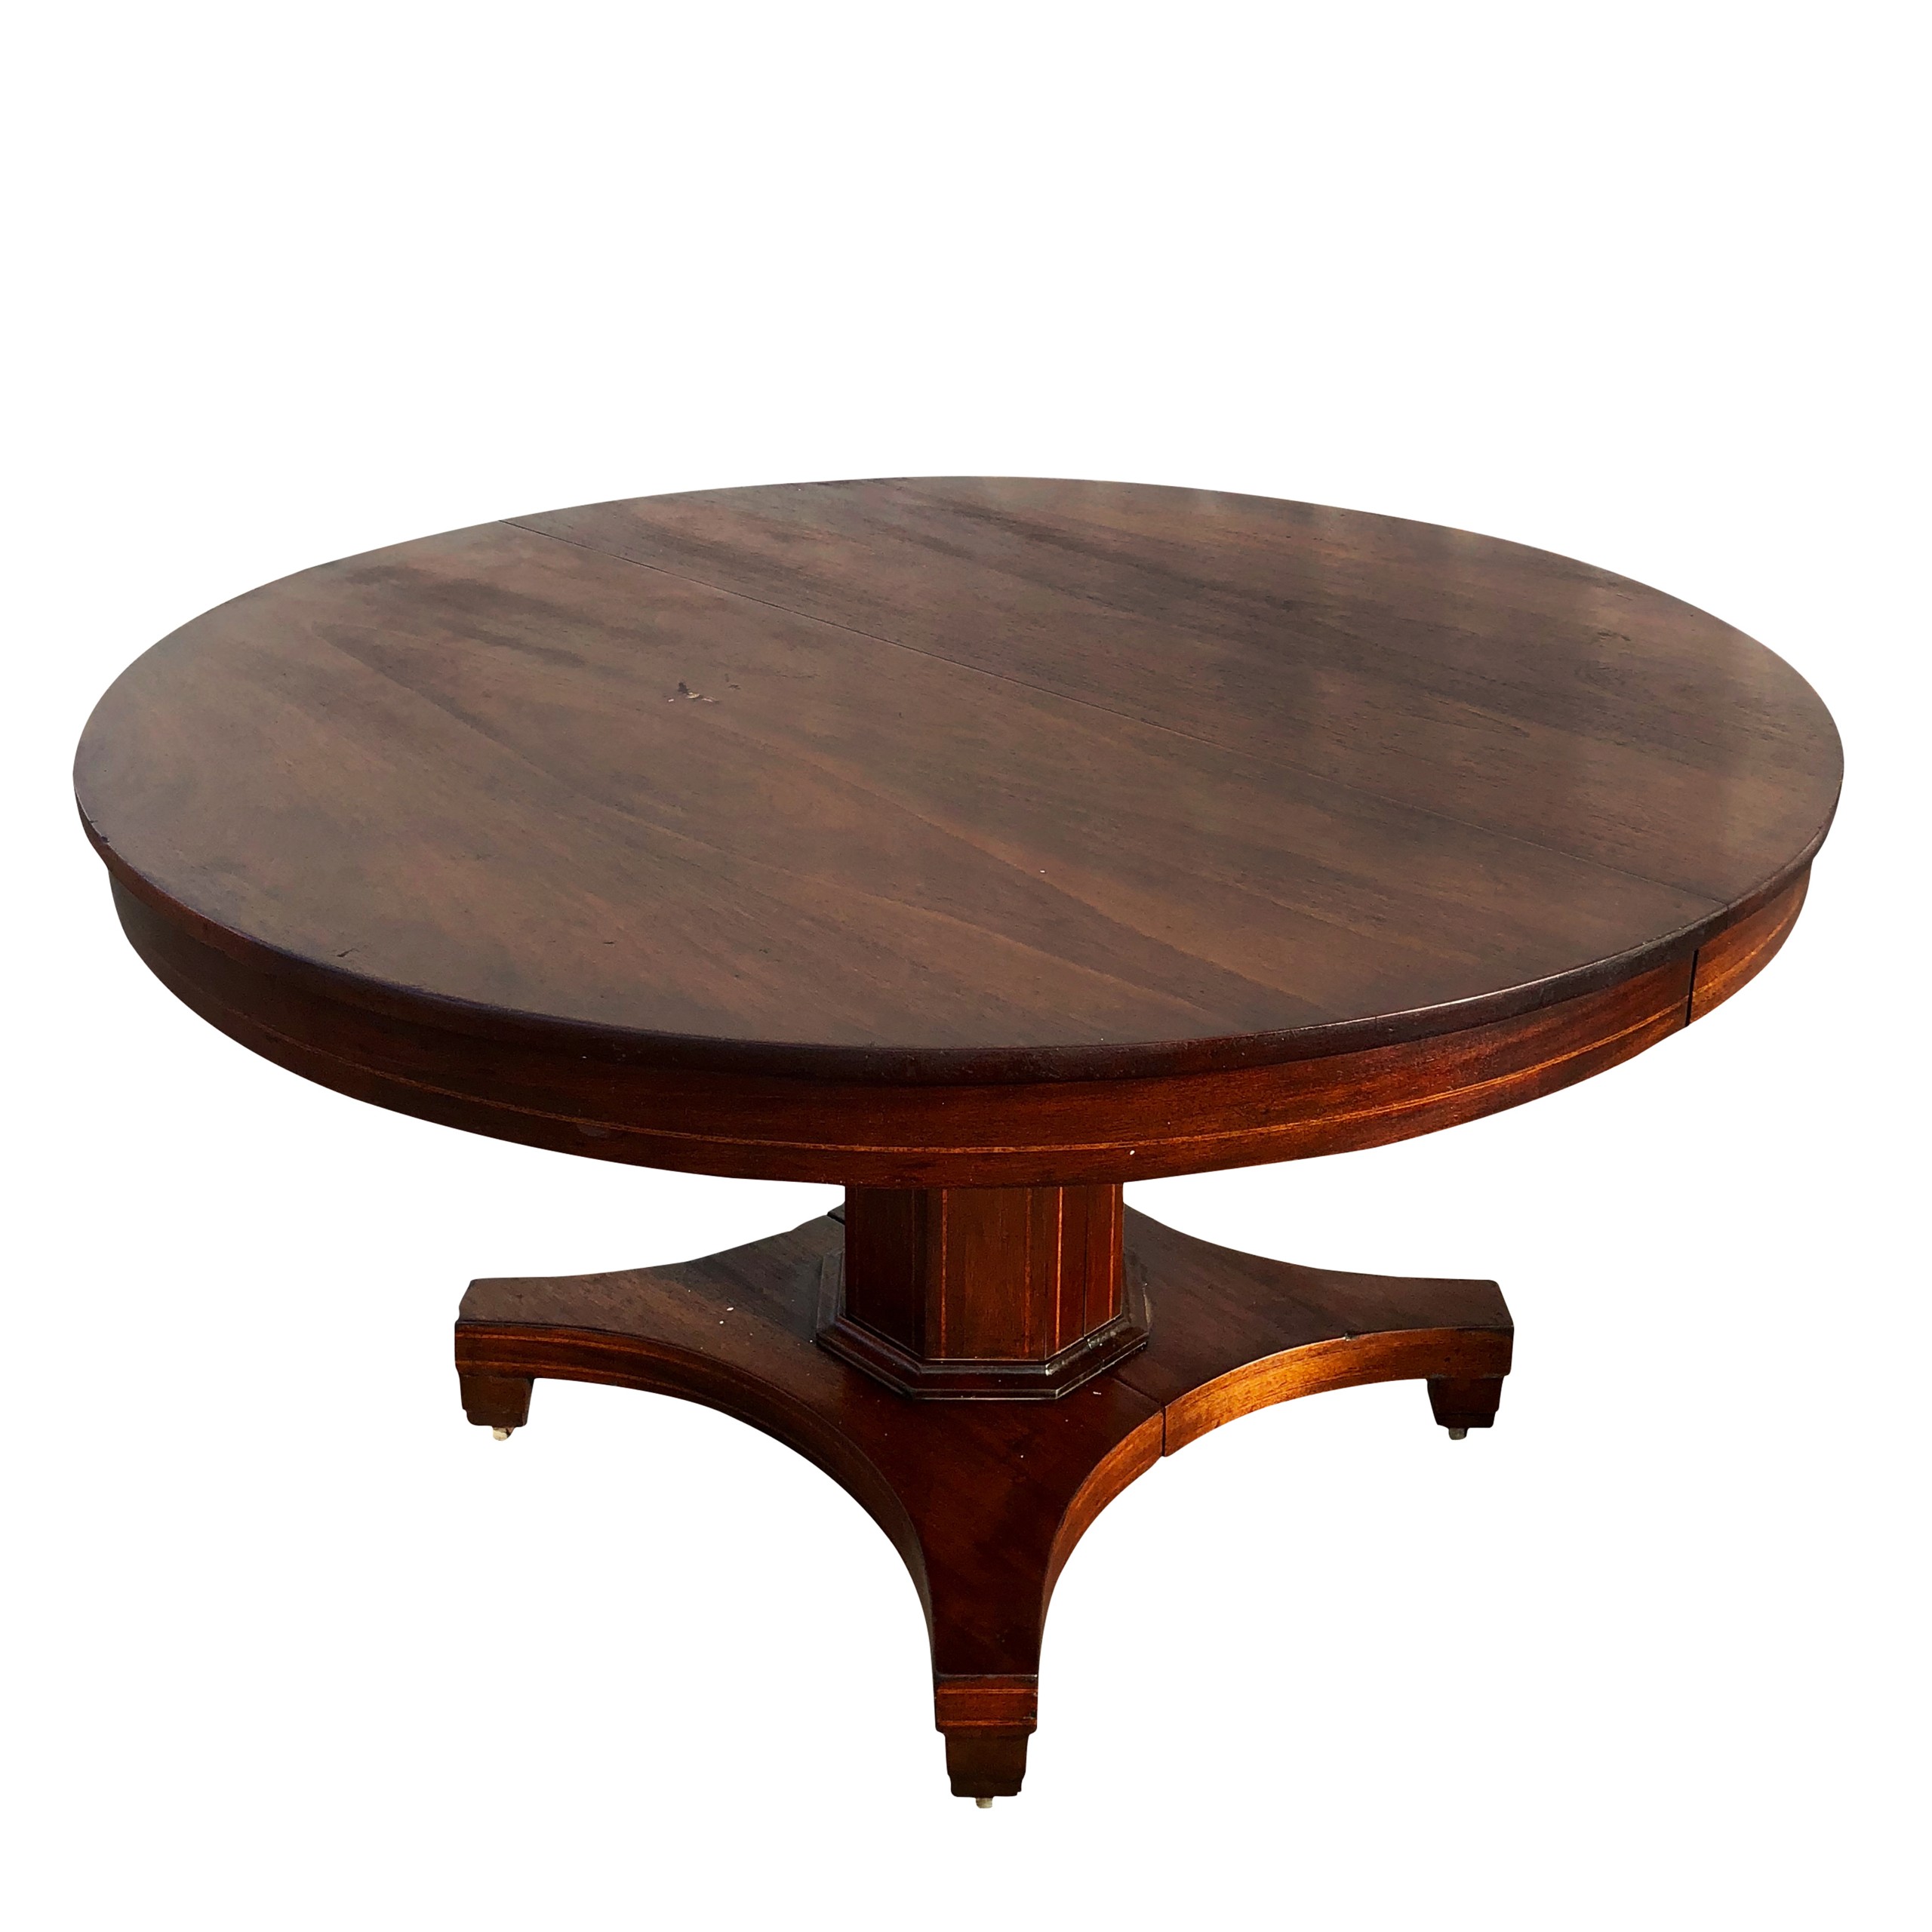 Antique federal round mahogany inlaid dining pedestal